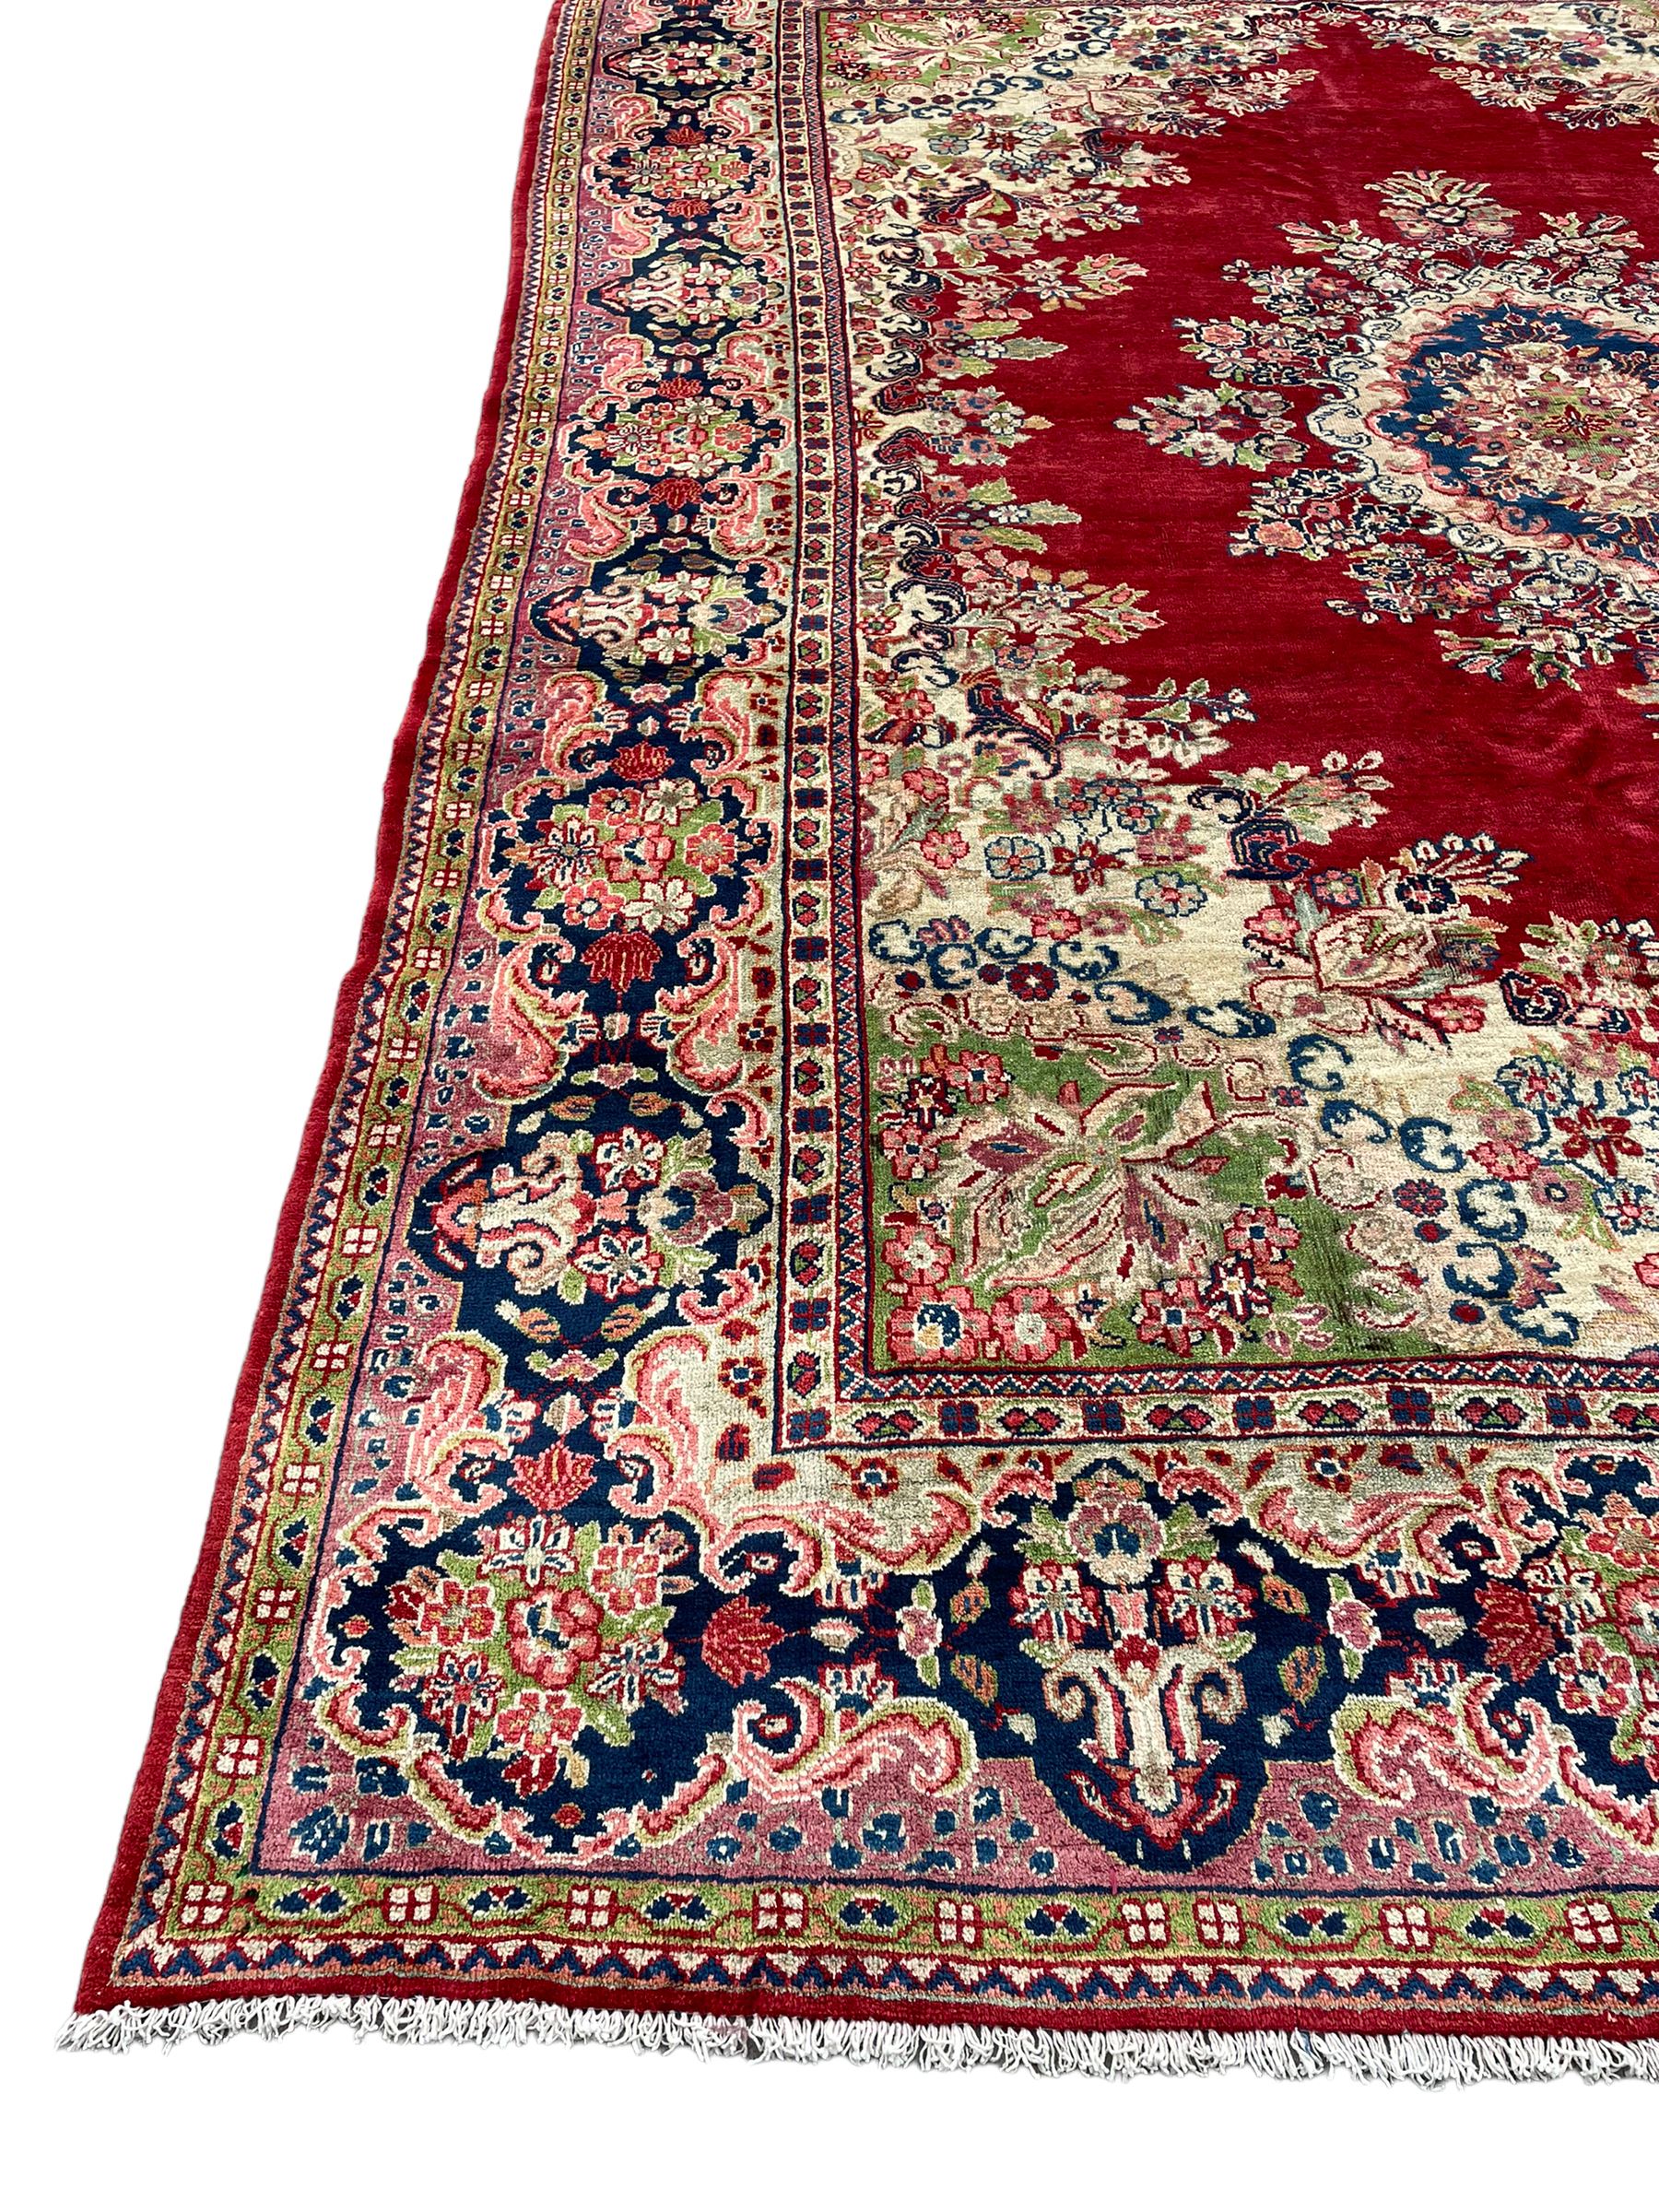 Persian Mahal crimson ground carpet - Image 2 of 8